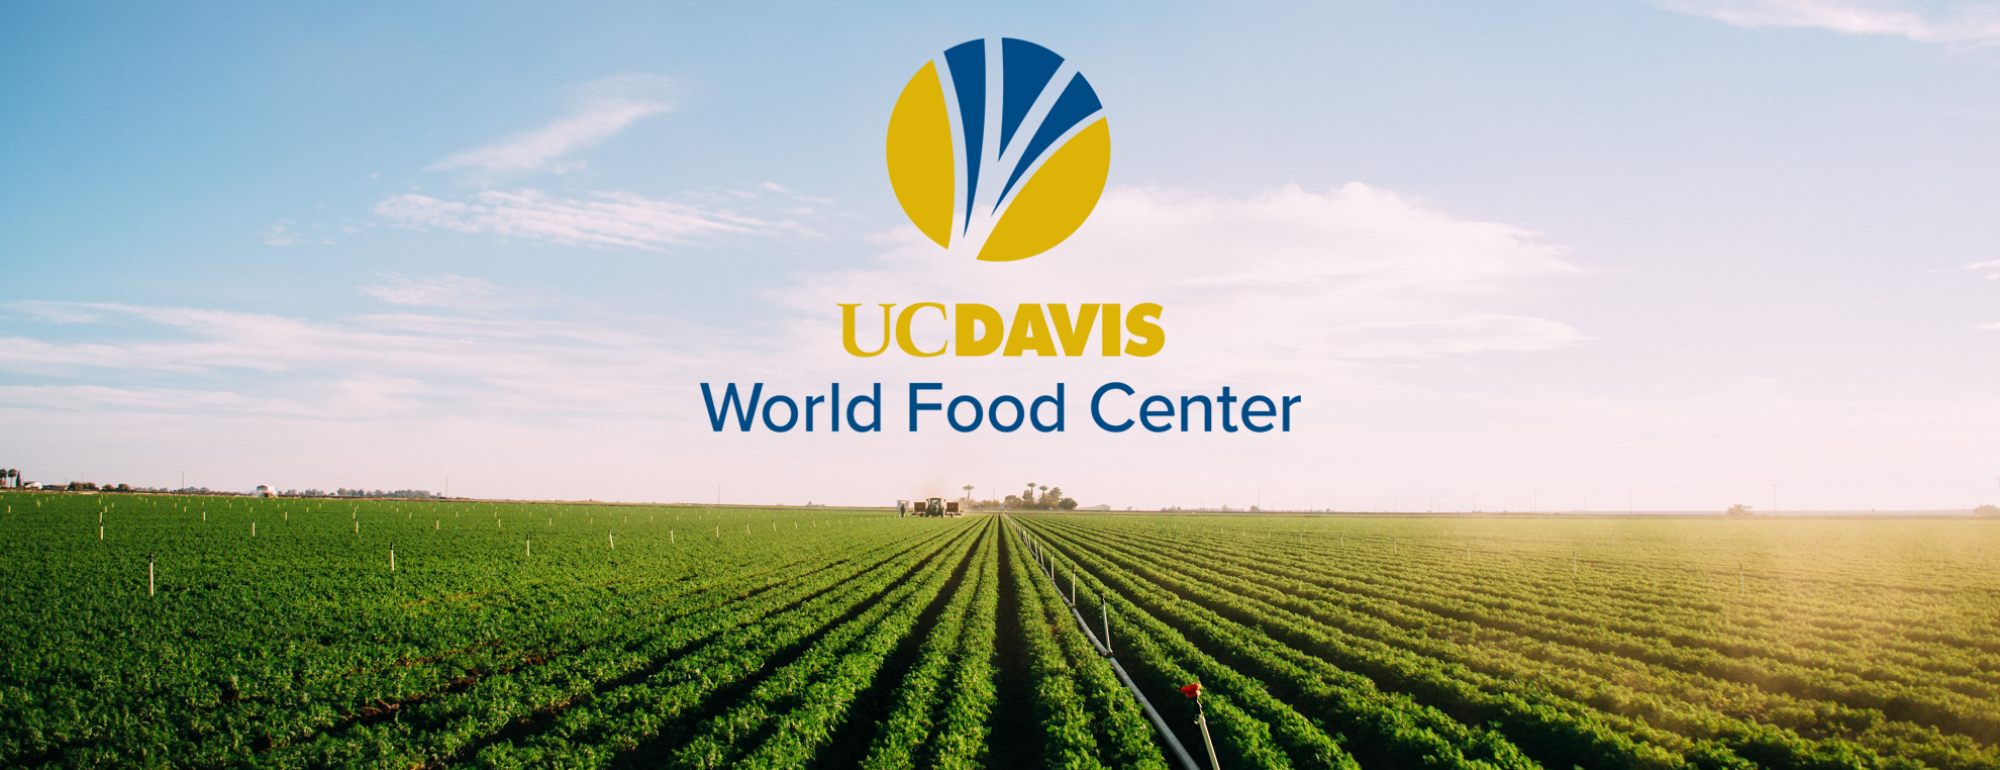 World Food Center logo